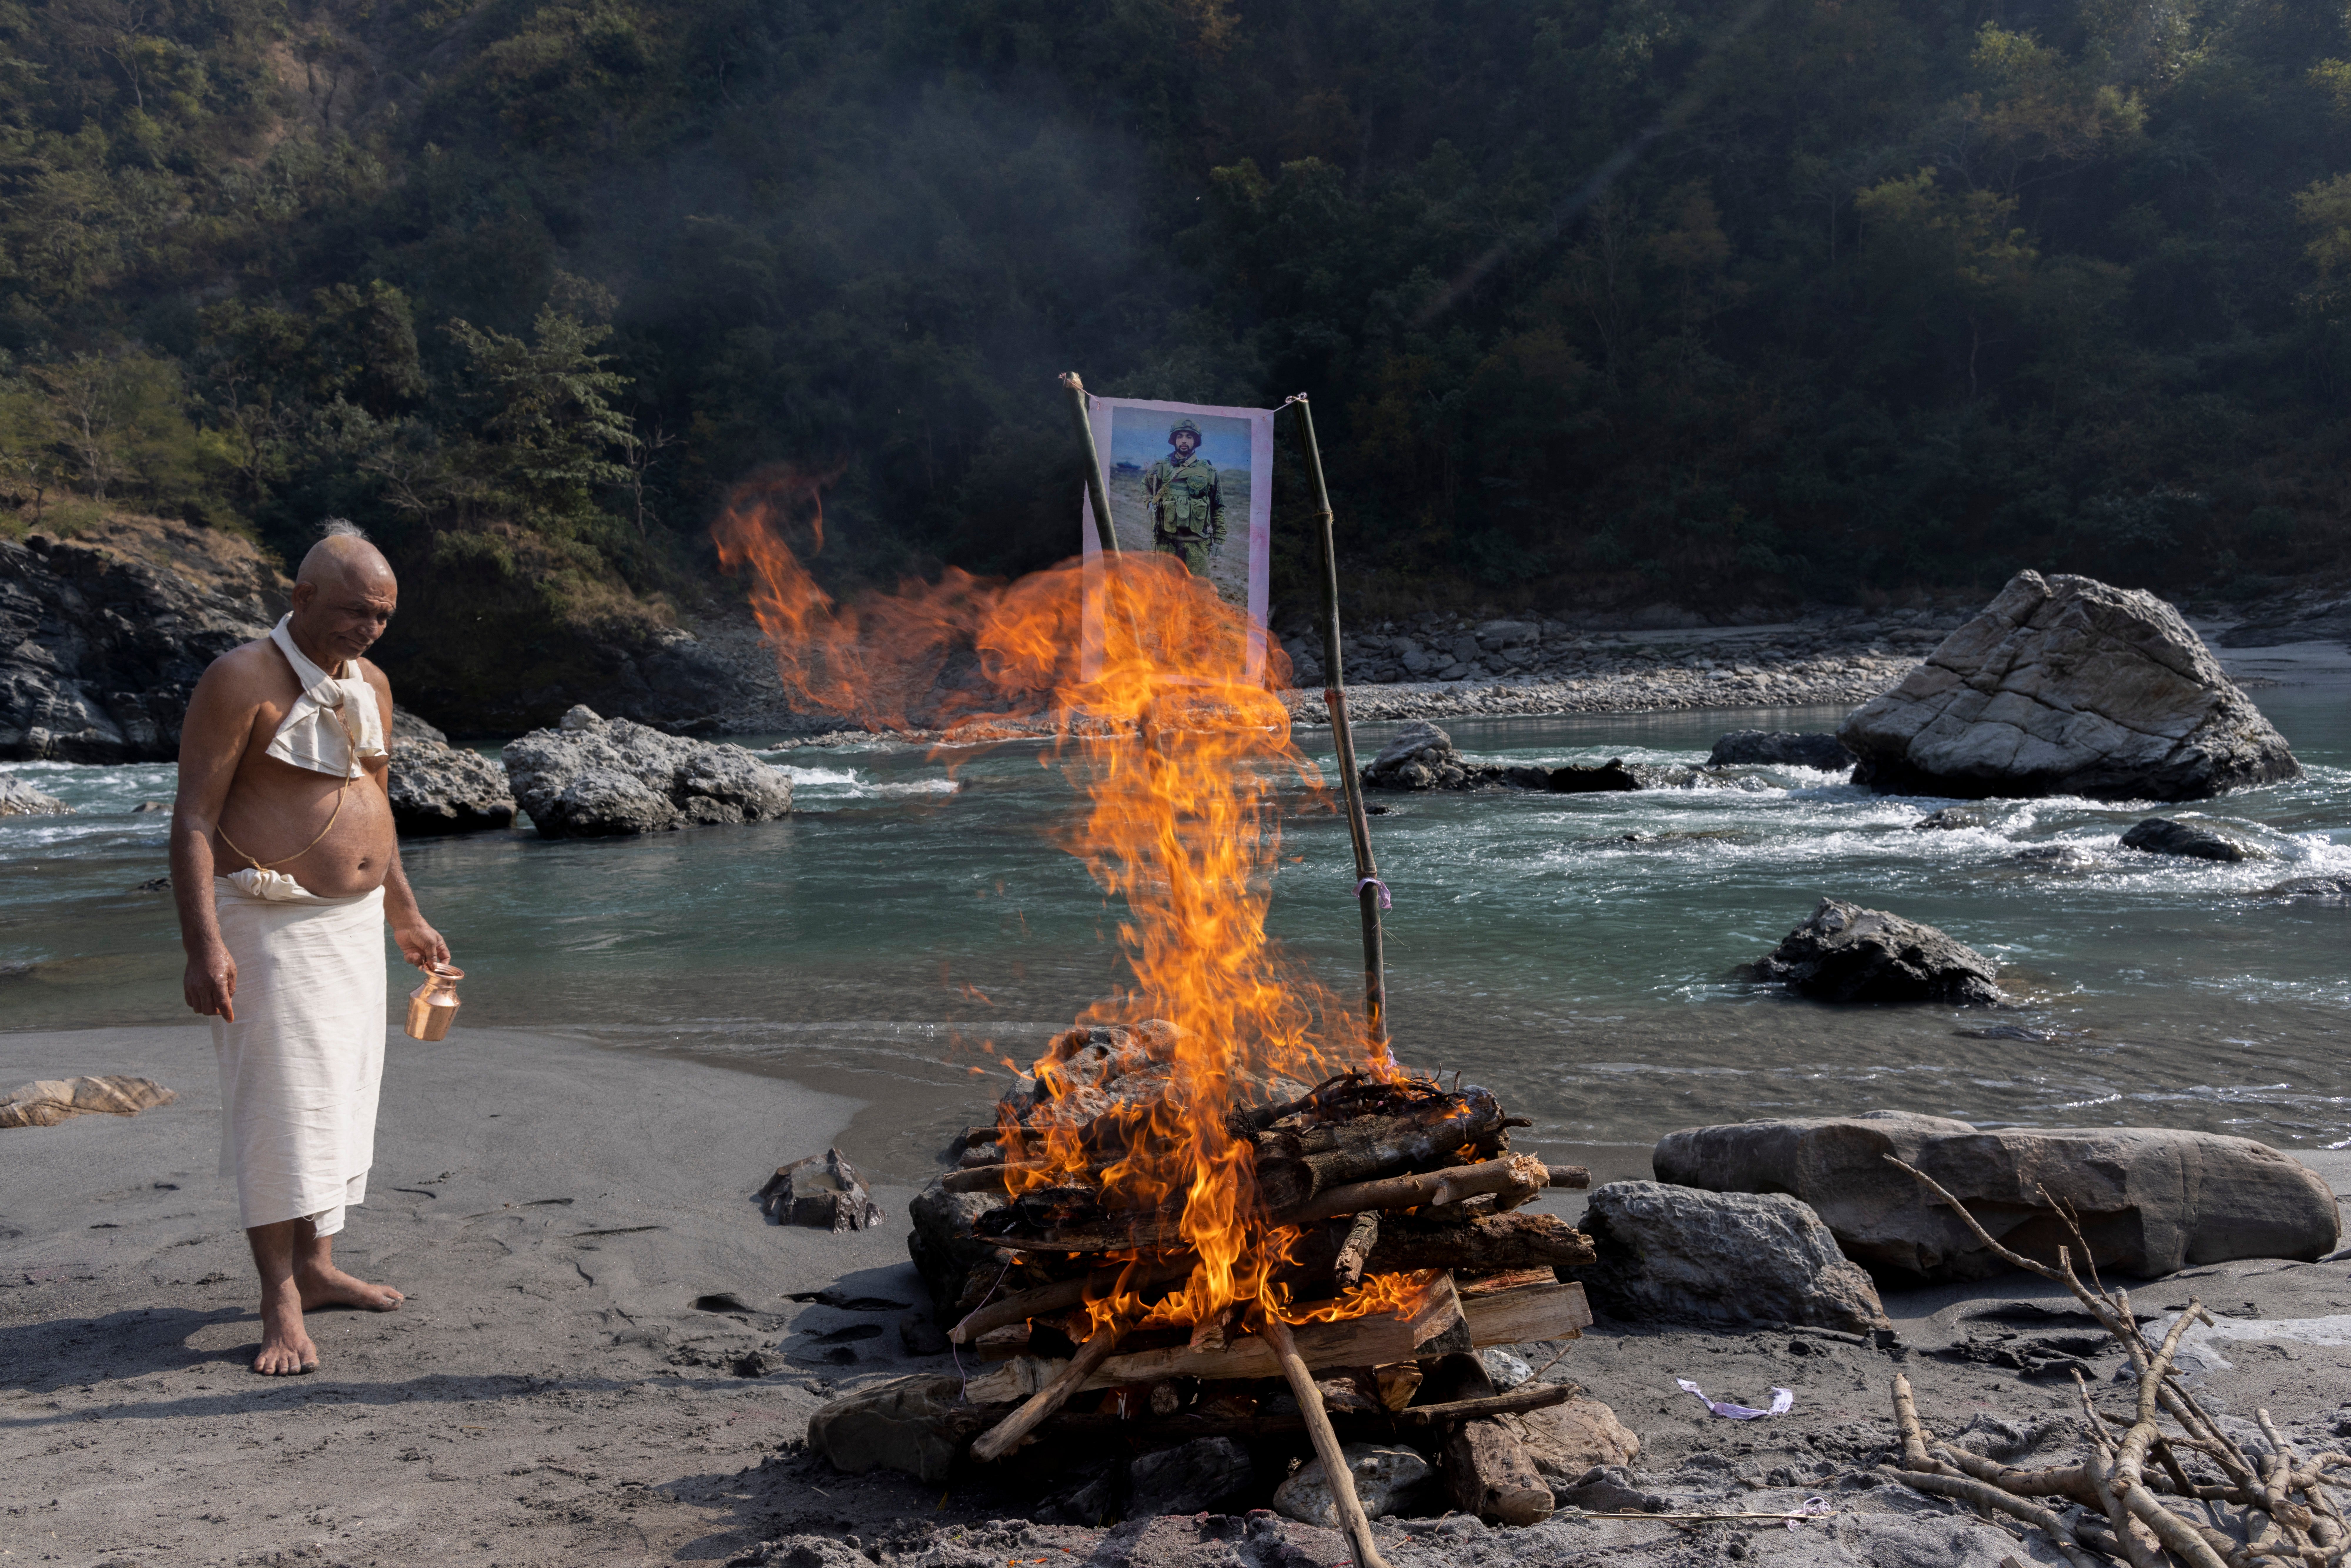 Gangadahr Prasad Aryal, an uncle of the deceased Hari Aryal, cremates a symbolic representation of Hari’s body at the bank of the Kaligandaki River